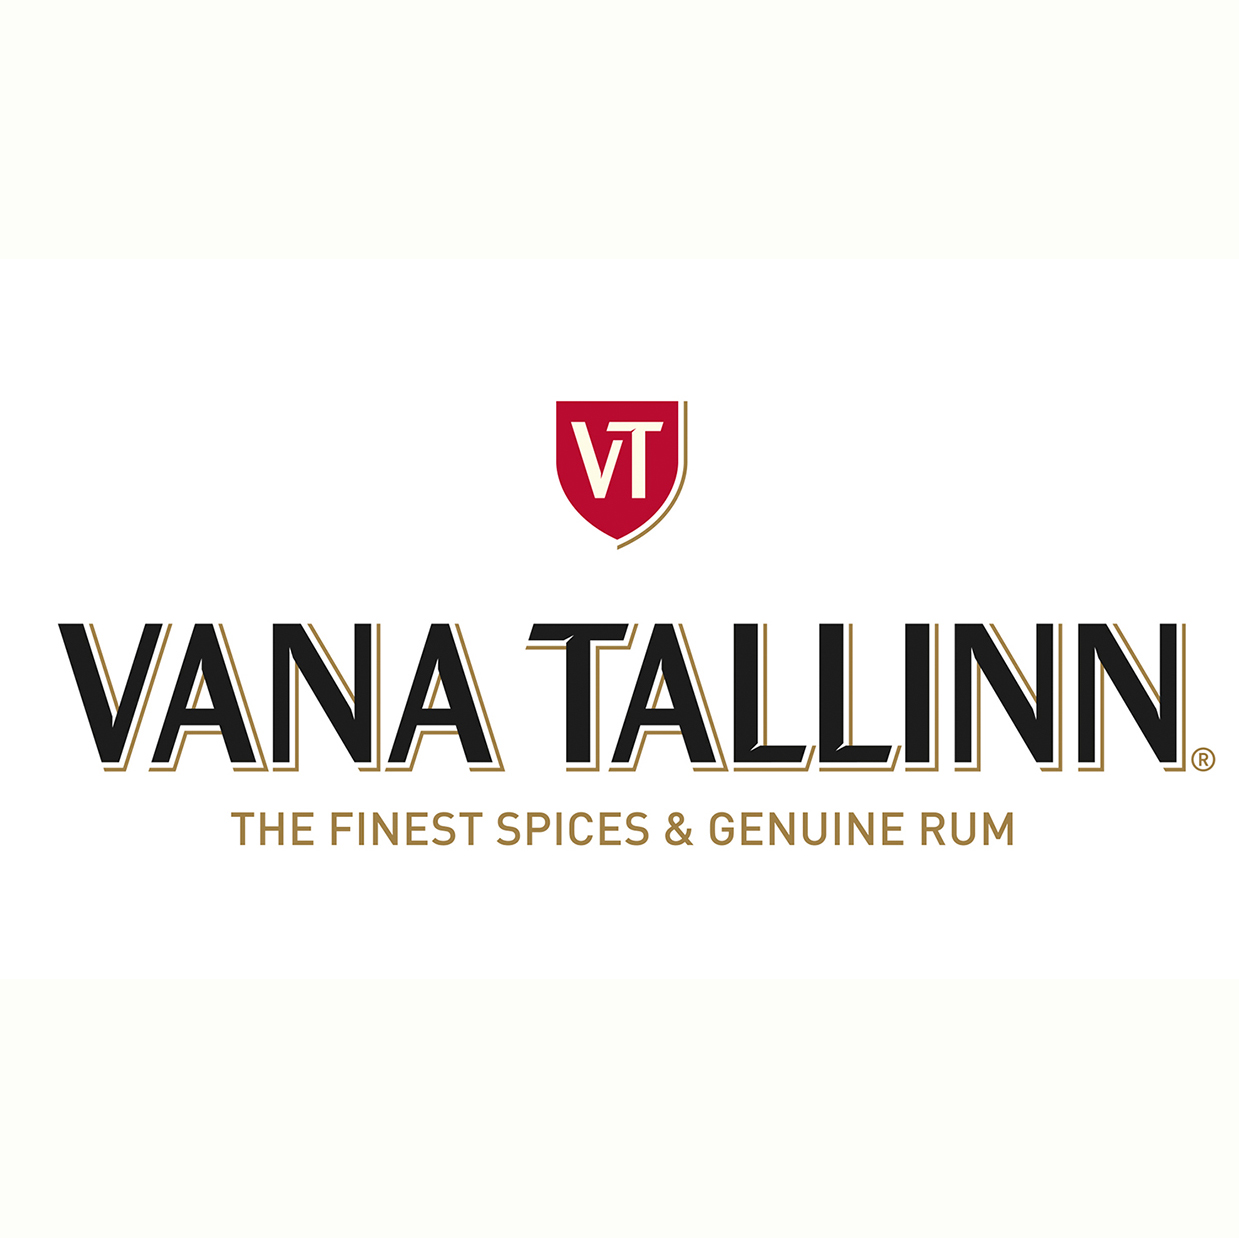 Крем-Ликер Старый Таллин Vana Tallinn Ice-Cream 0,5л 16% в Украине